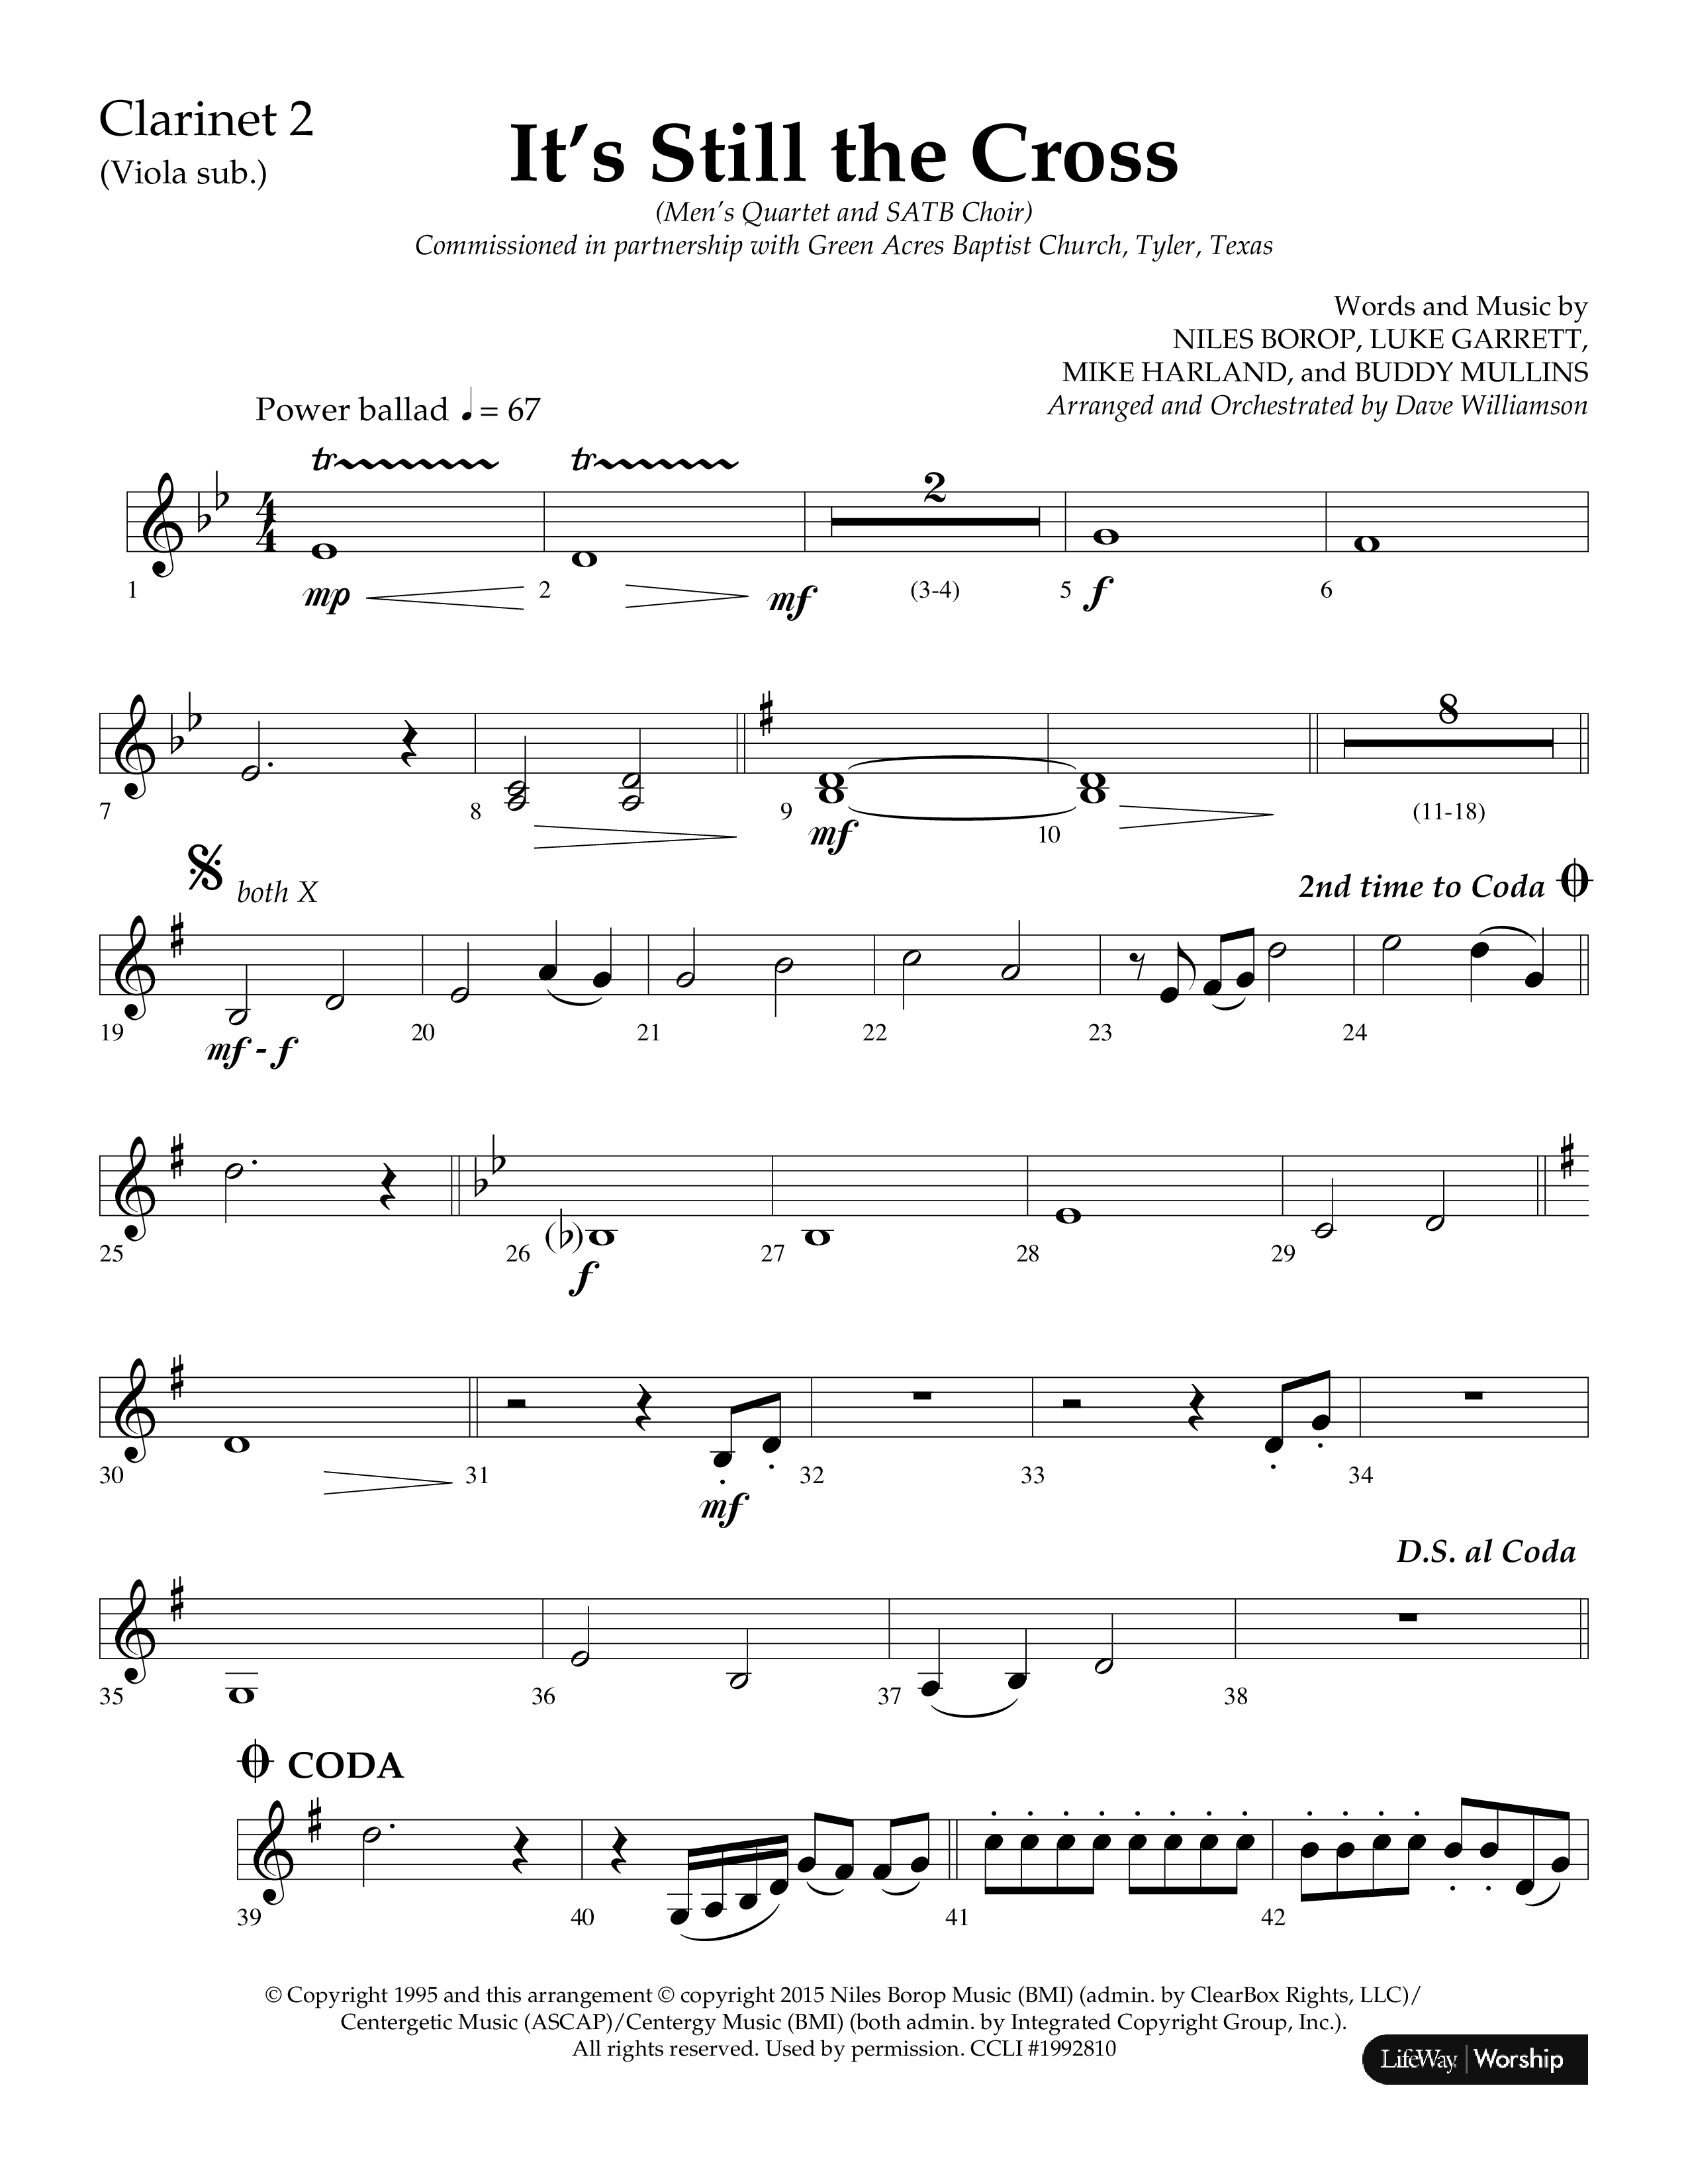 It’s Still The Cross (Choral Anthem SATB) Clarinet 1/2 (Lifeway Choral / Arr. Dave Williamson)